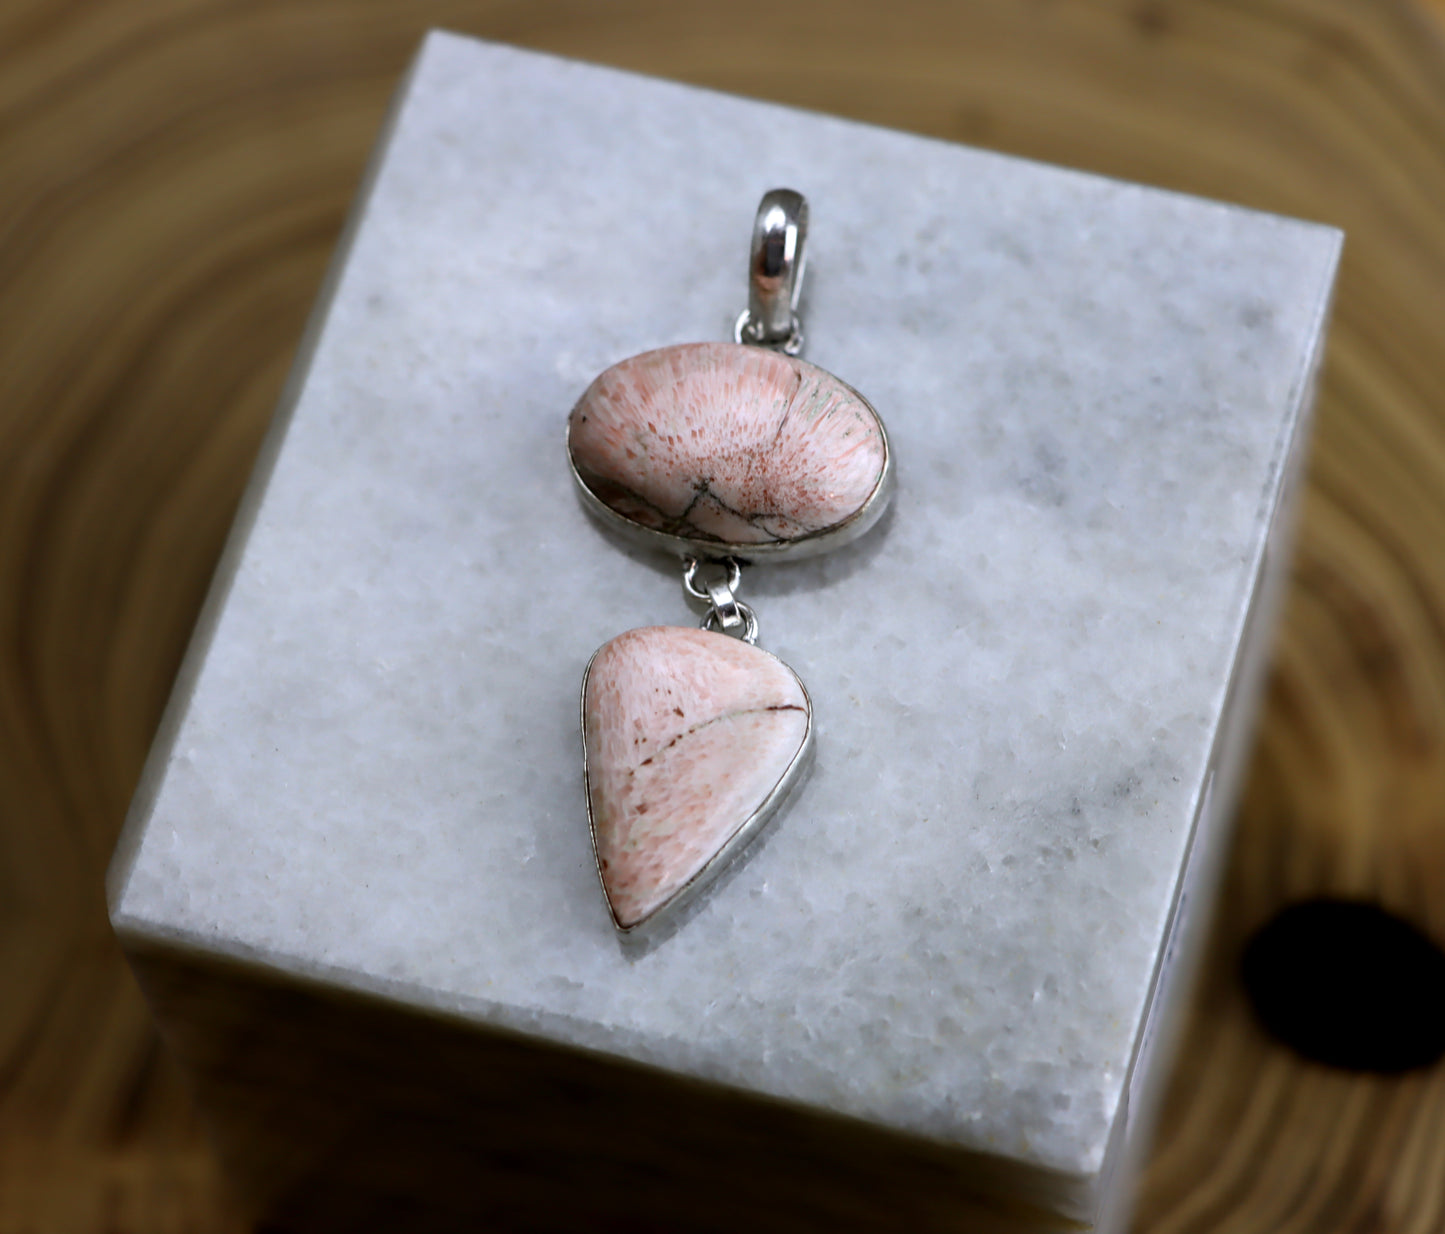 Two-piece scolecit pendant